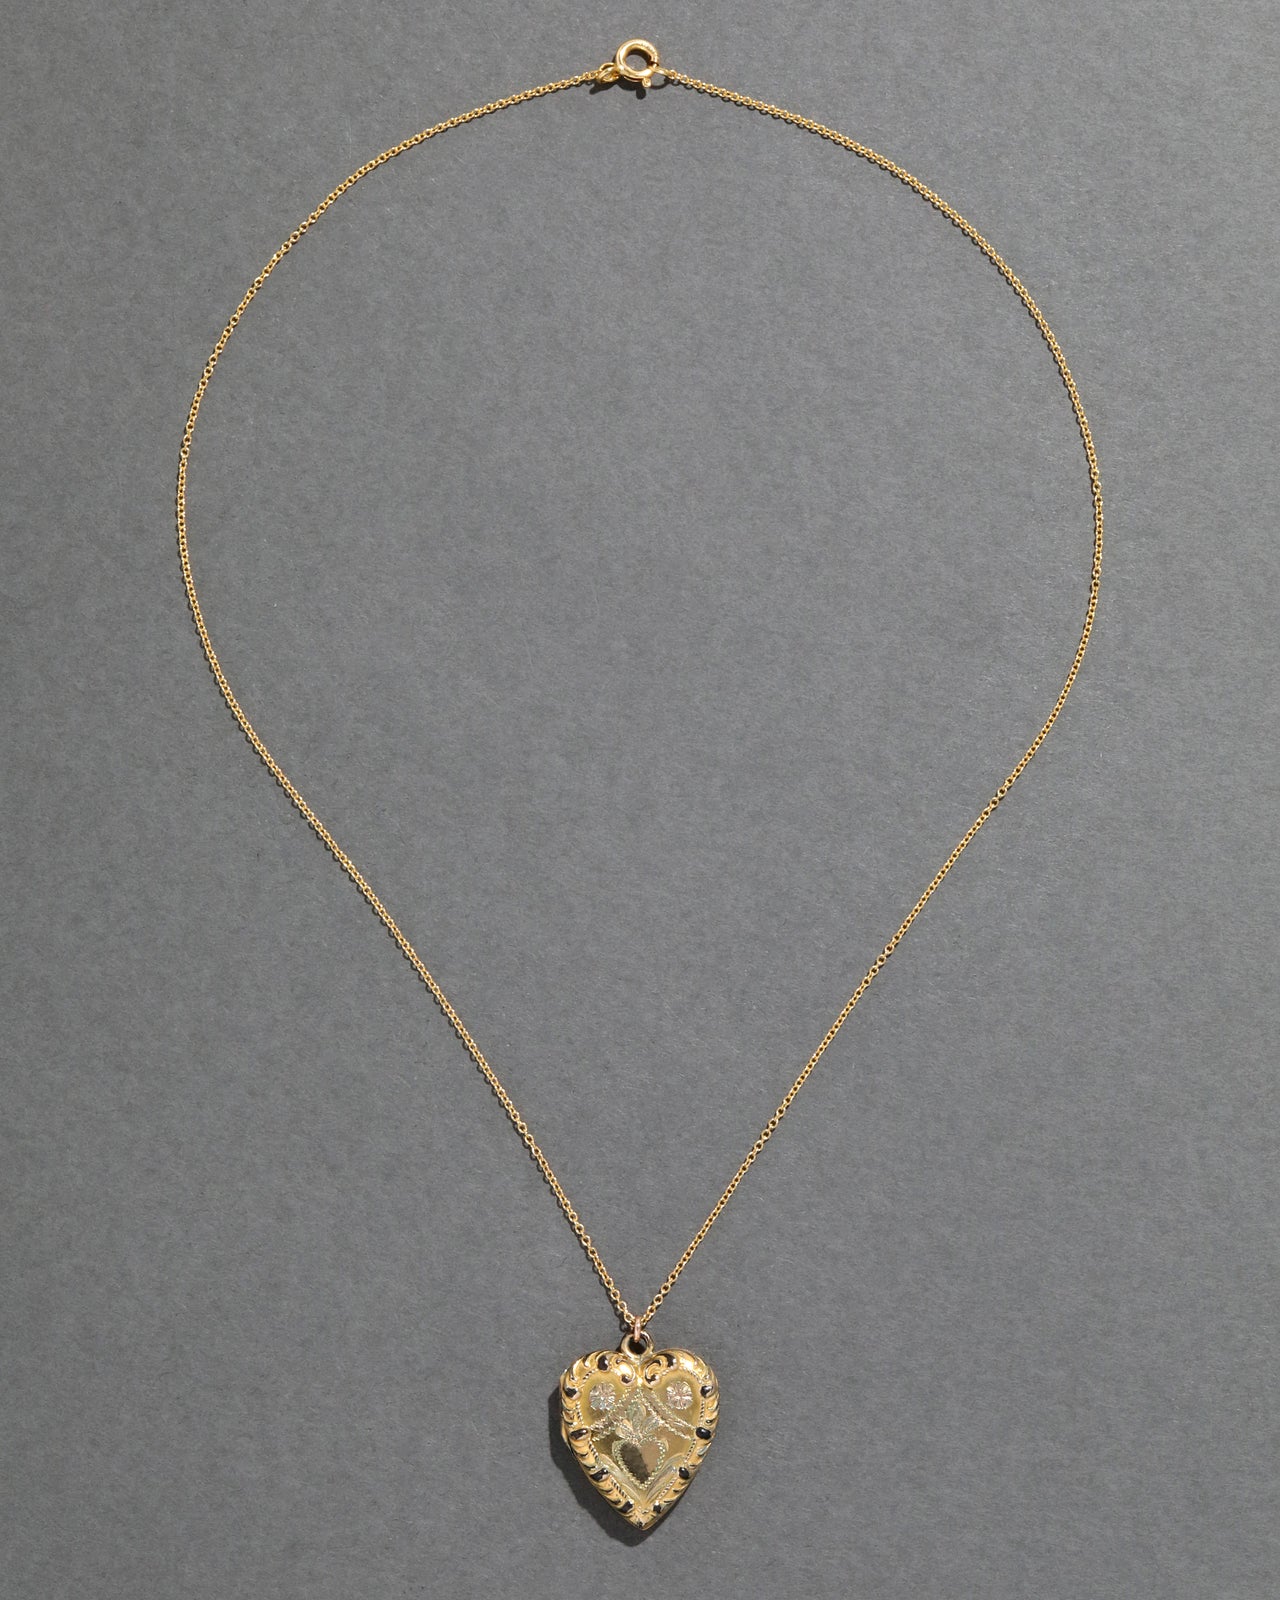 Vintage 1950s 12k Gold FIlled Hand-Etched Heart Locket Necklace - Photo 2